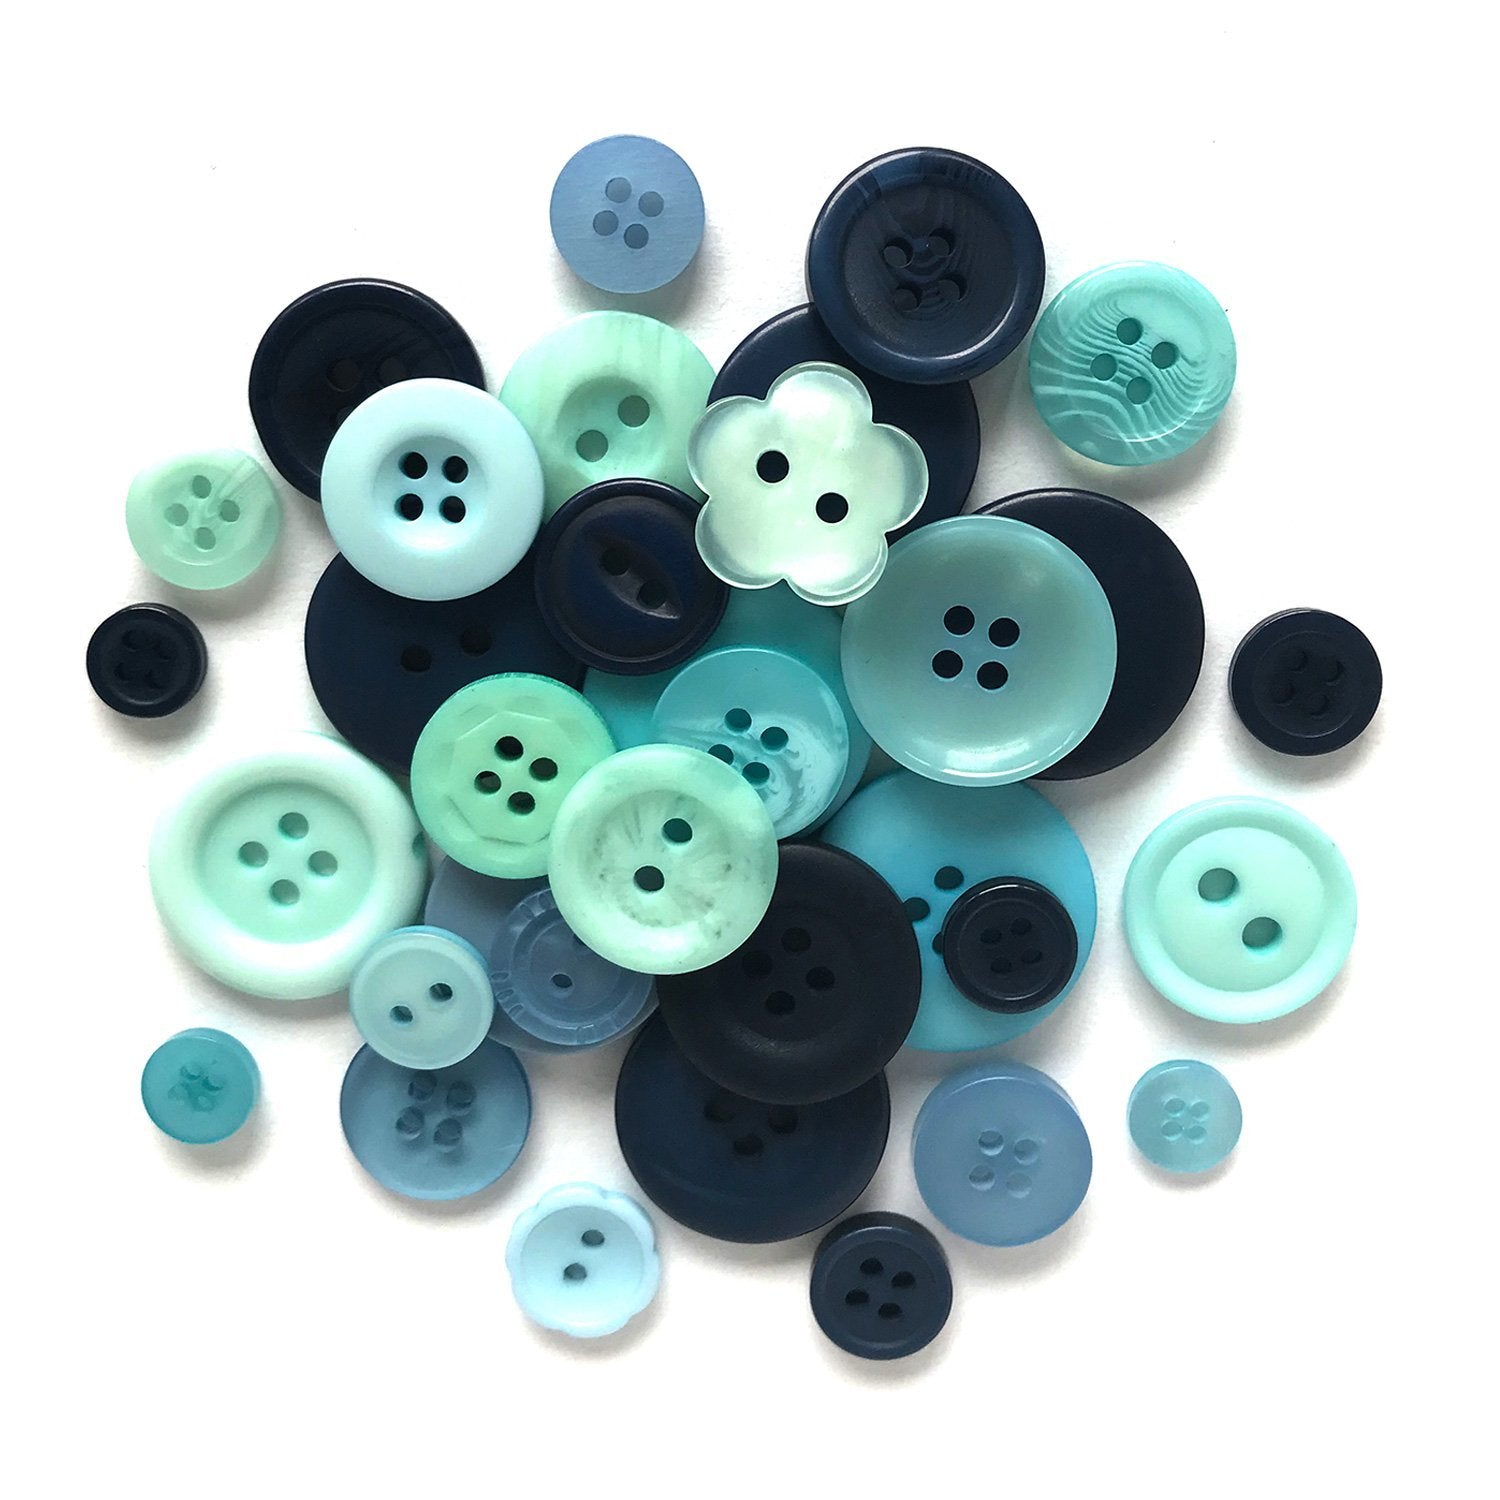 Buy Color Splash!® Craft Buttons, 1 lb Bag at S&S Worldwide